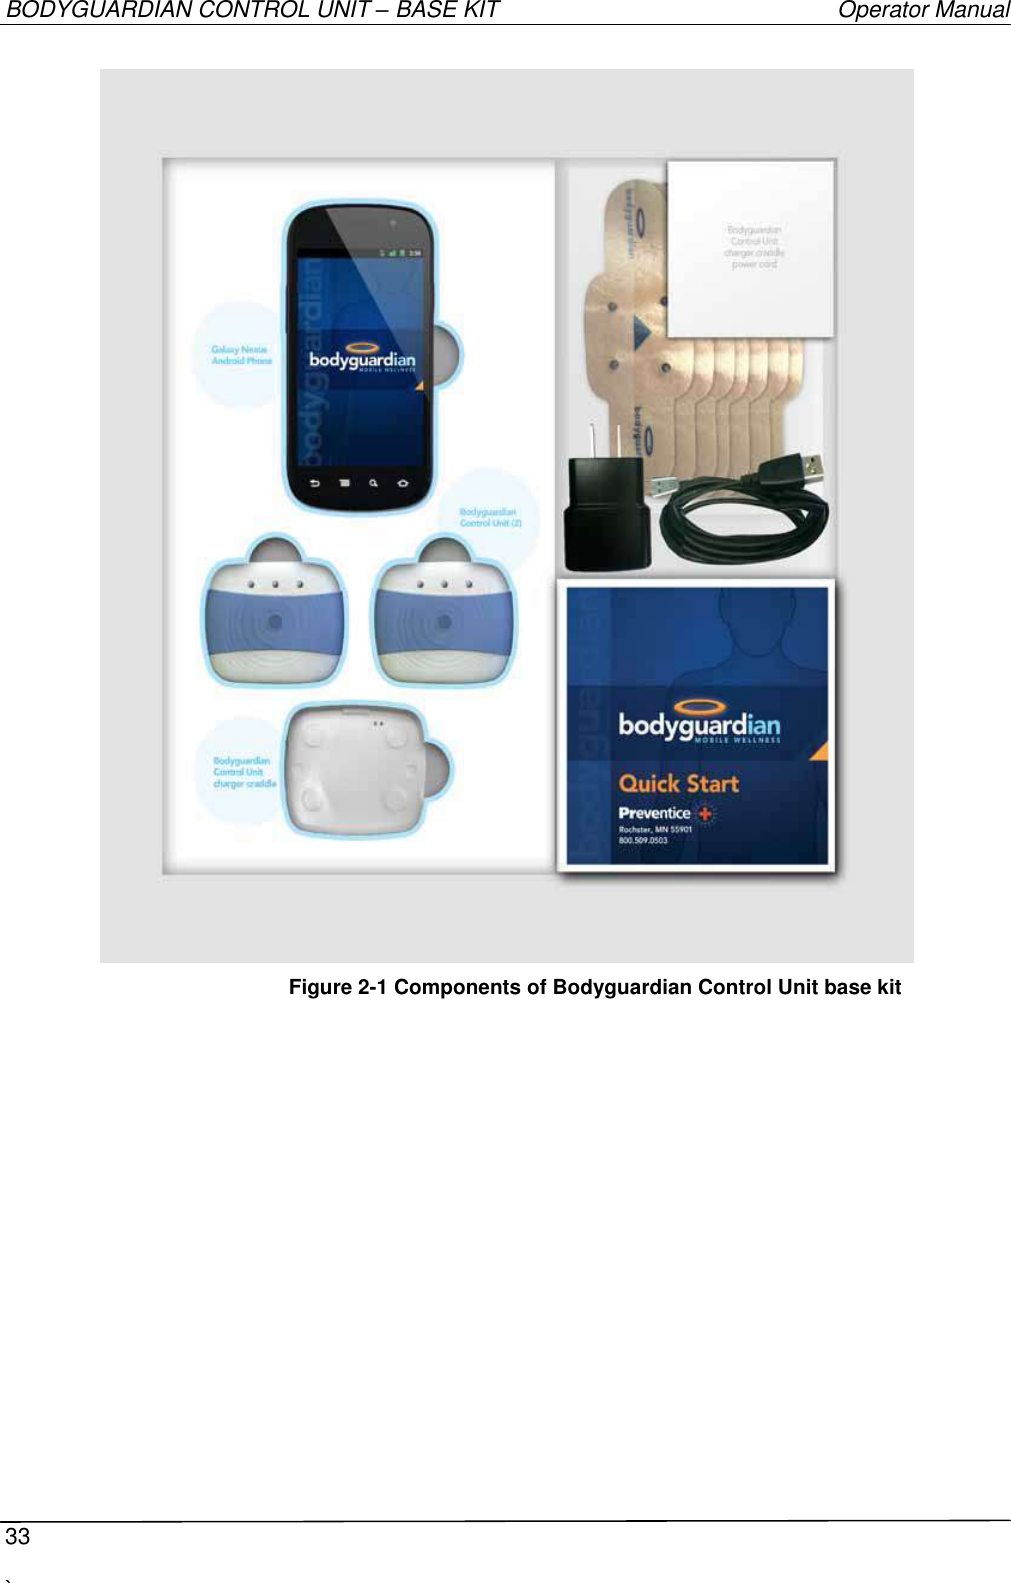 BODYGUARDIAN CONTROL UNIT – BASE KIT   Operator Manual  33  `    Figure 2-1 Components of Bodyguardian Control Unit base kit  